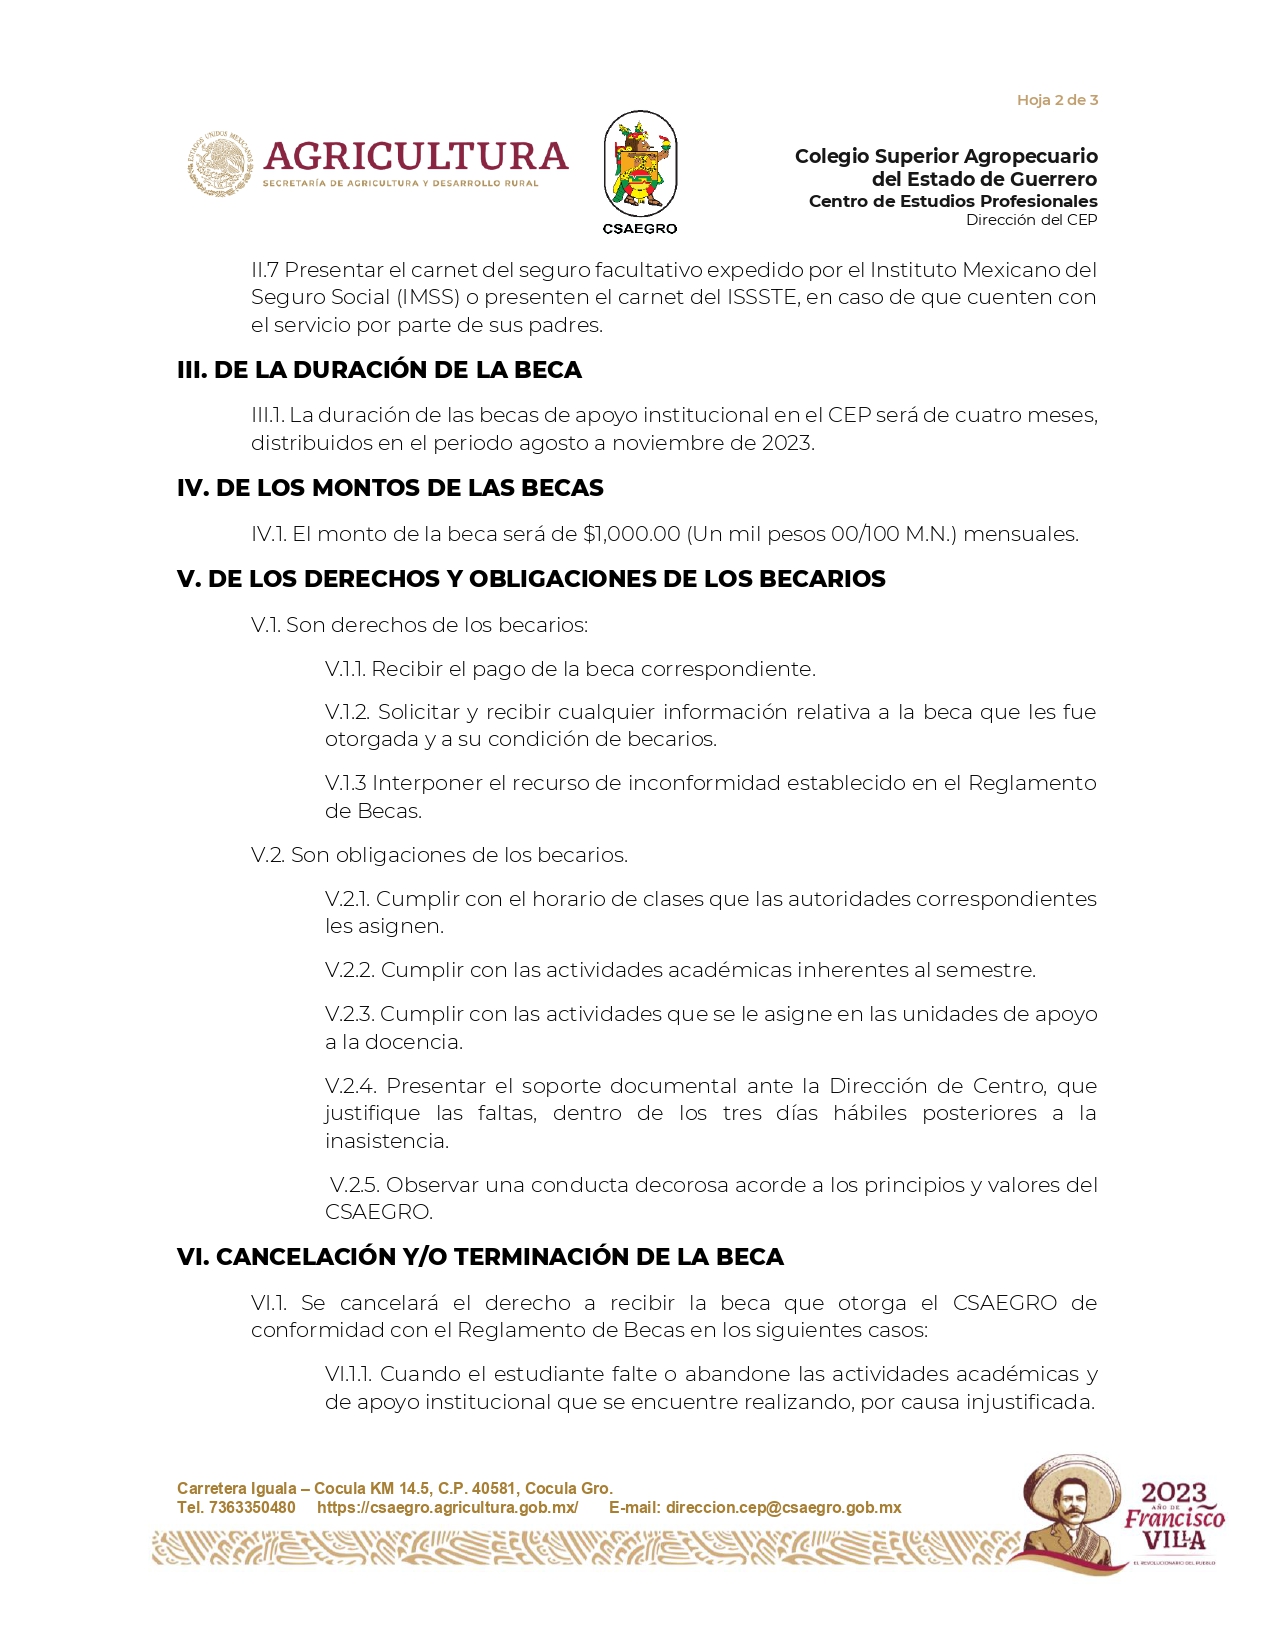 CONVOCATORIA BECA DE APOYO INSTITUCIONAL SEMESTRE AGOSTO 2023 - ENERO 2024_page-0002.jpg